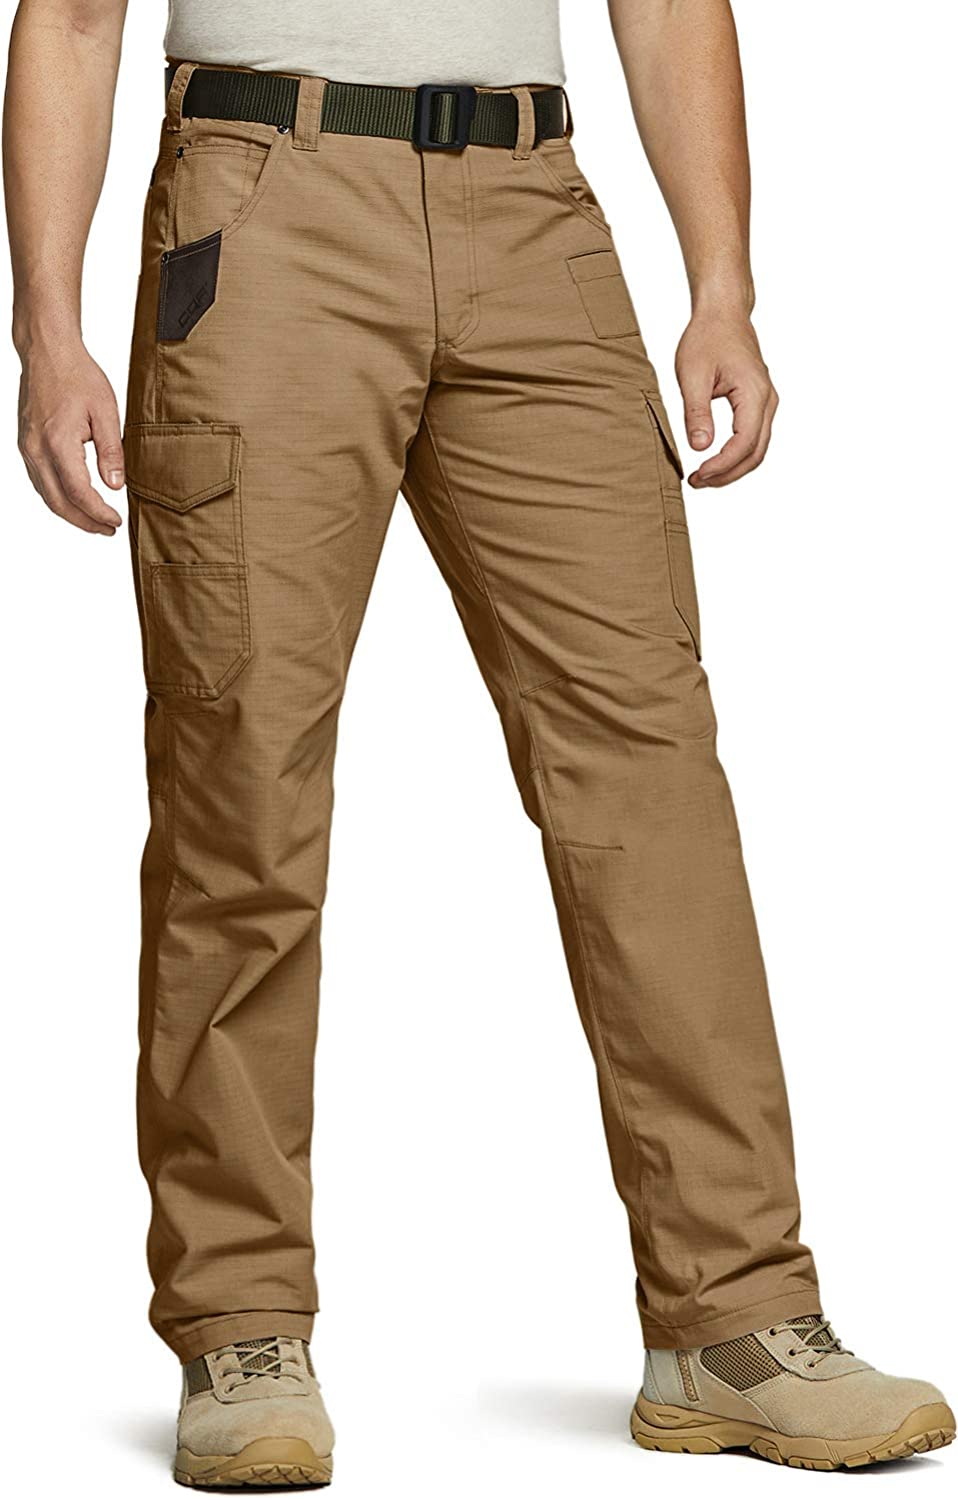 Water Resistant Ripstop Work Pants Hiking Outdoor Apparel CQR Men's Tactical Pants Military Combat BDU/ACU Cargo Pants 